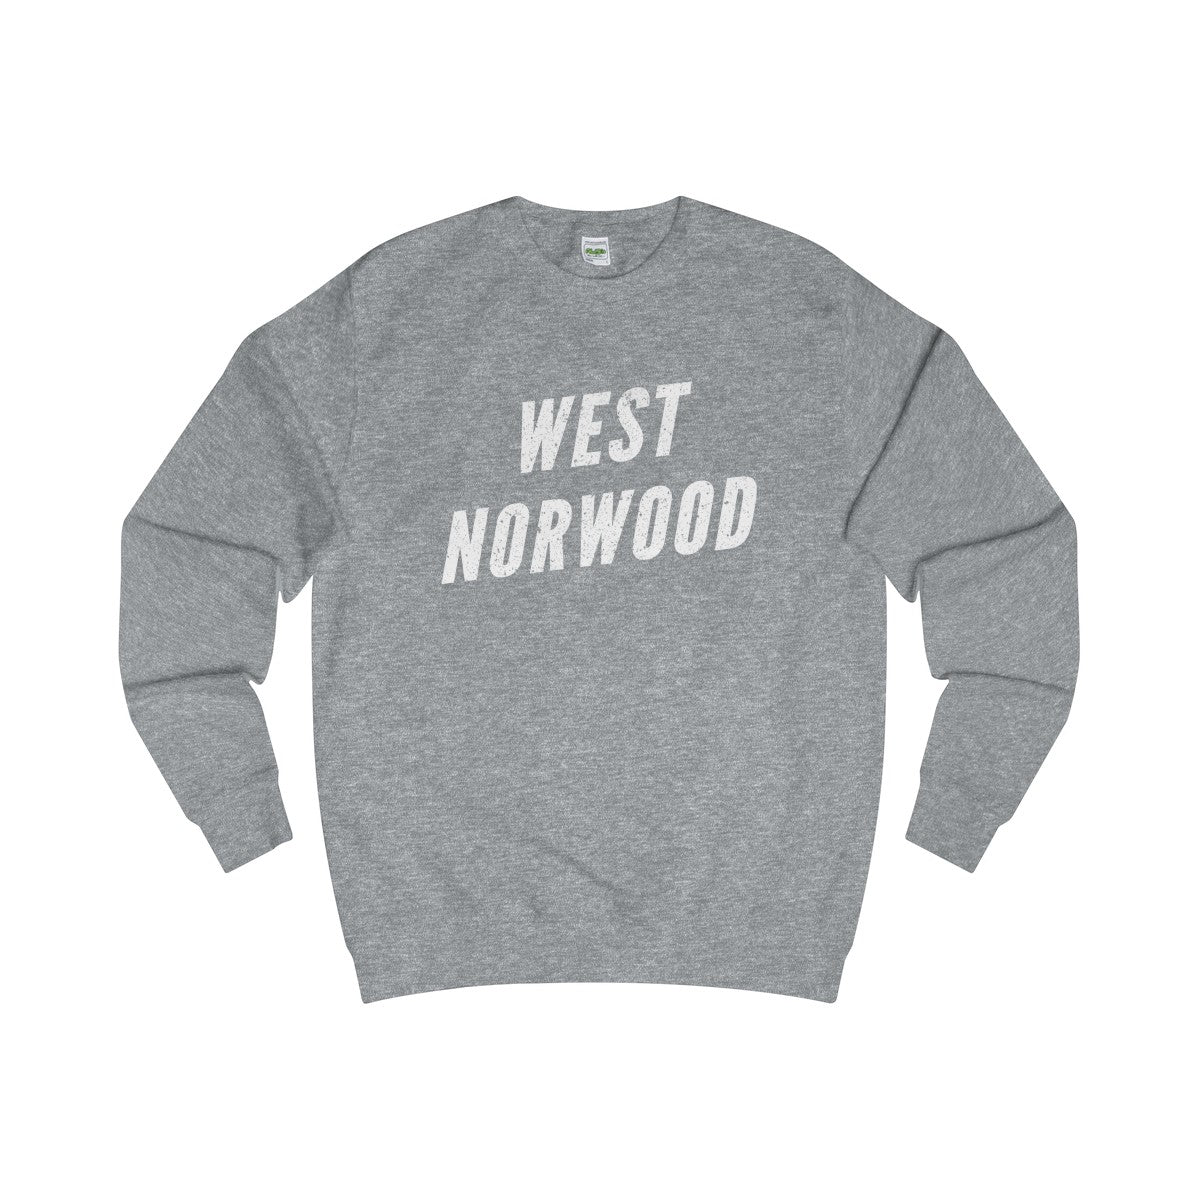 West Norwood Sweater